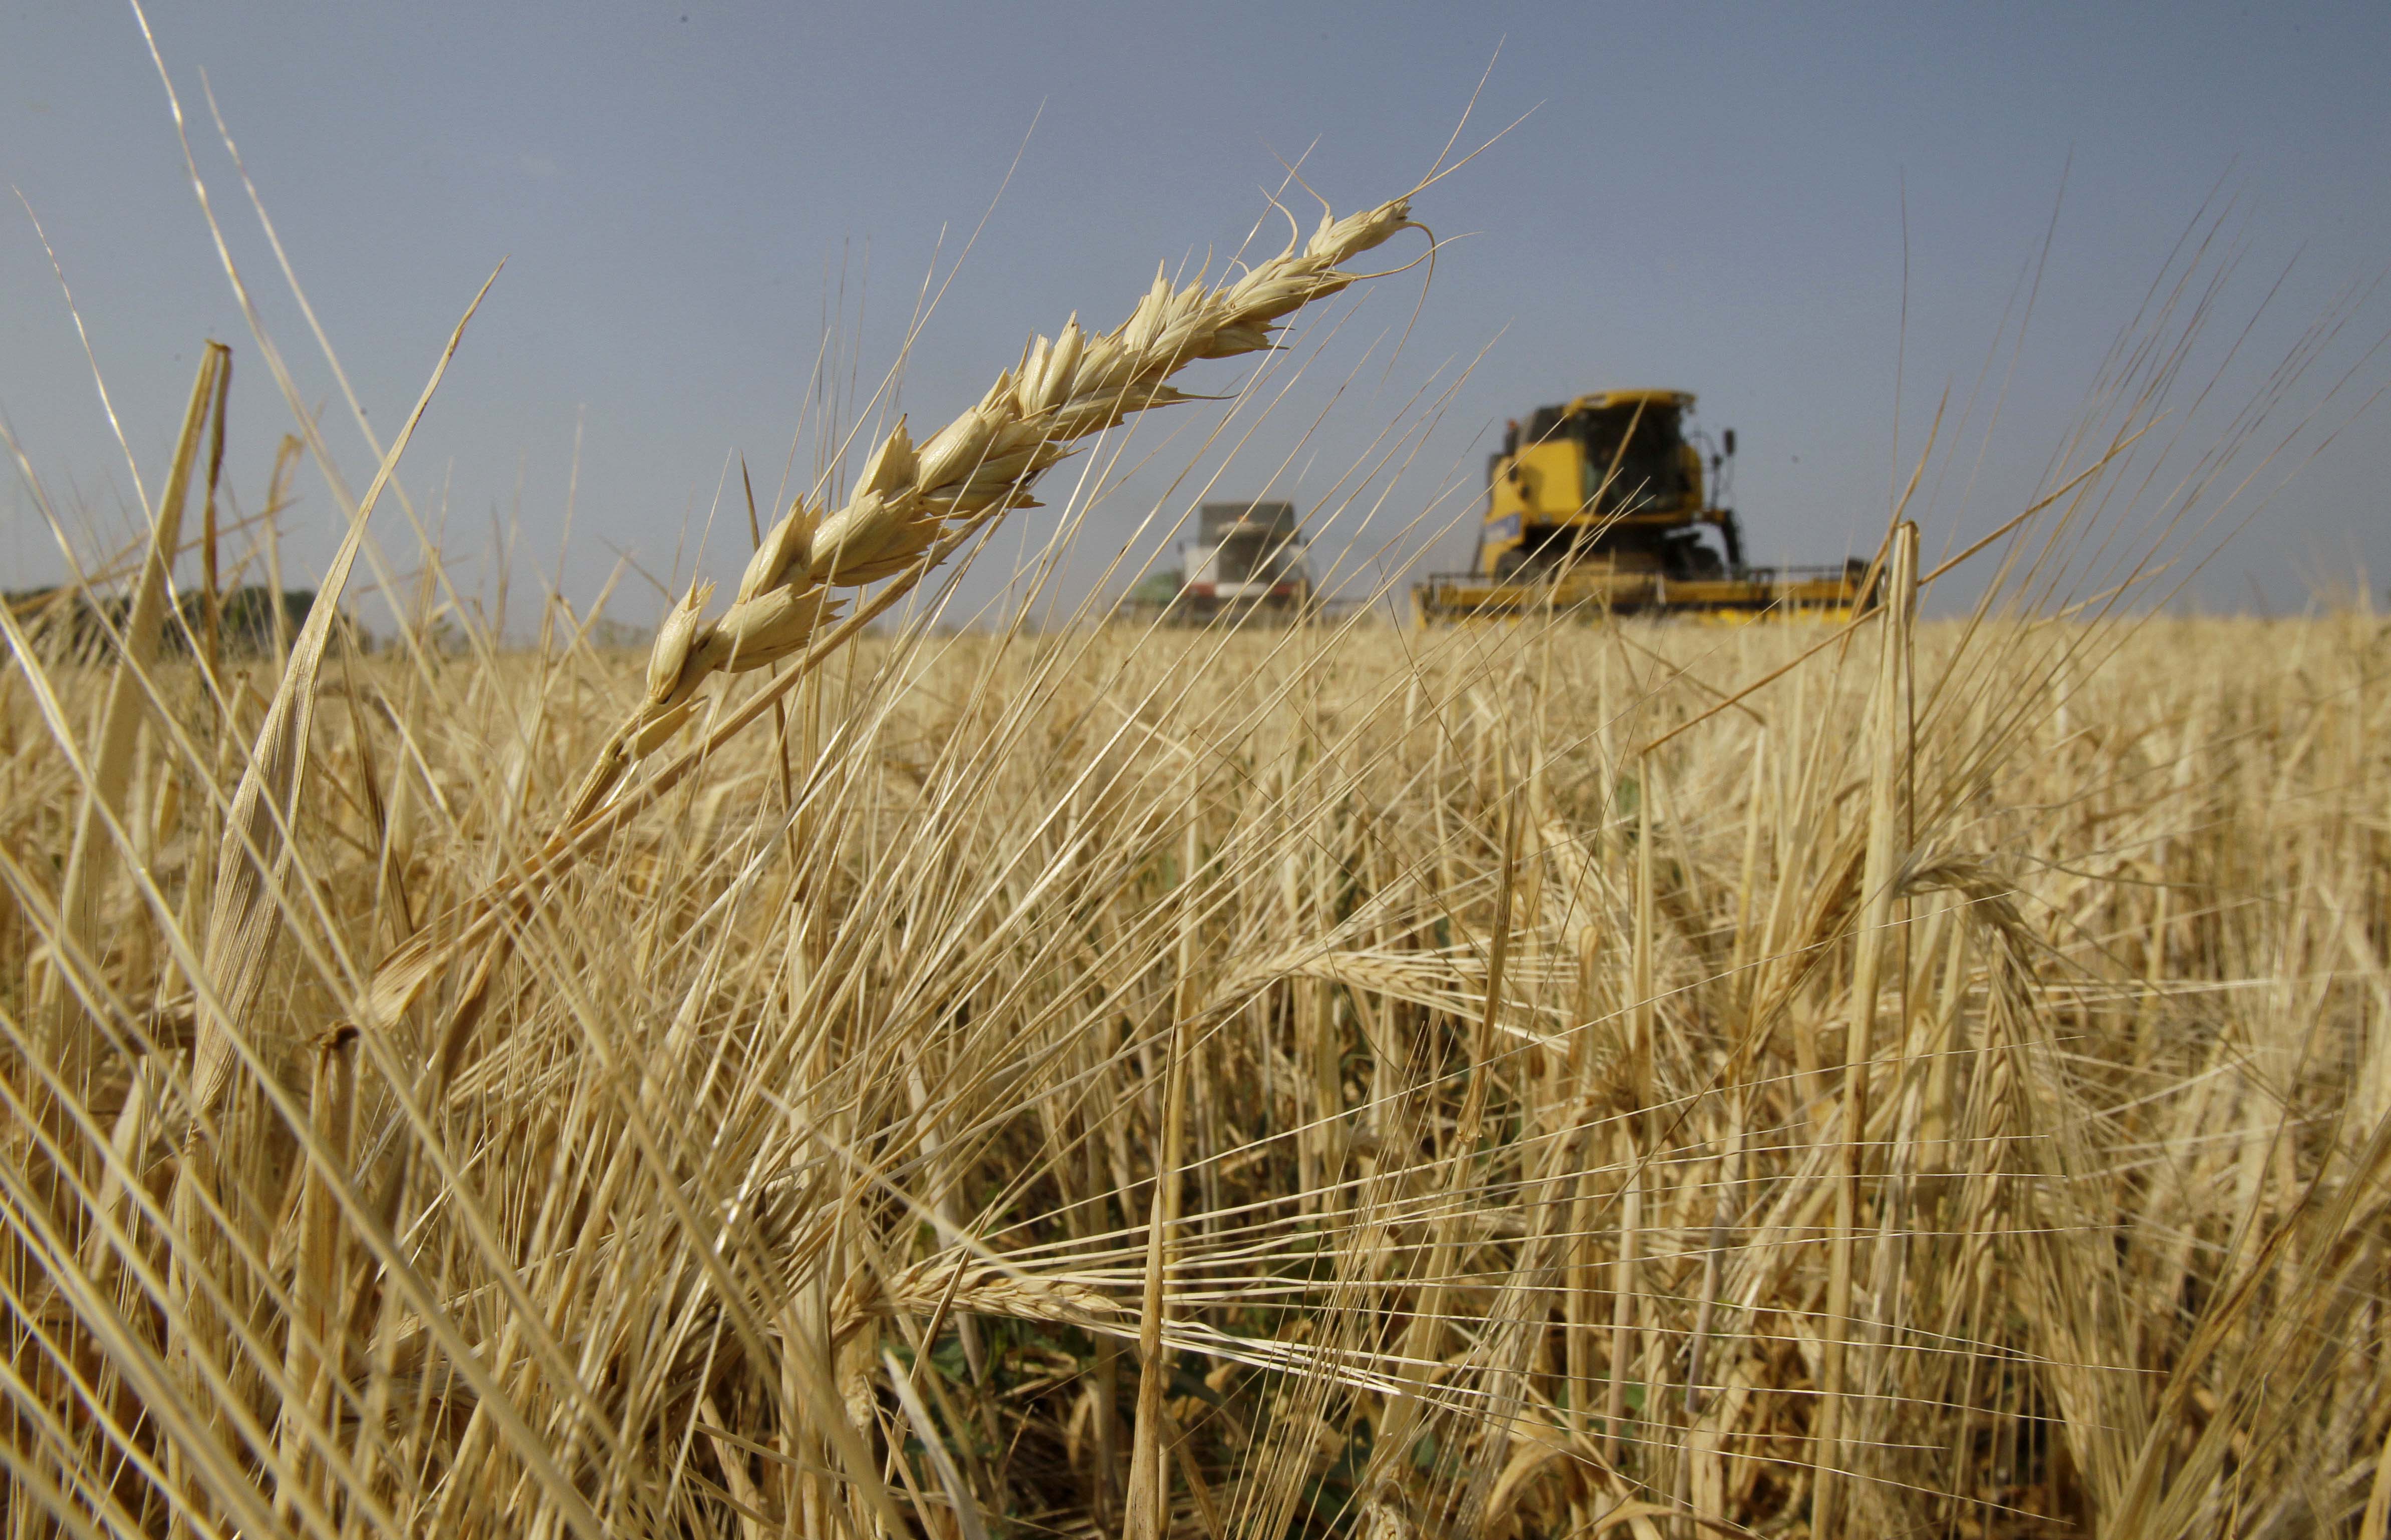 Hellastat: Παρατηρήθηκε αύξηση τιμής των γεωργικών προϊόντων το 2011